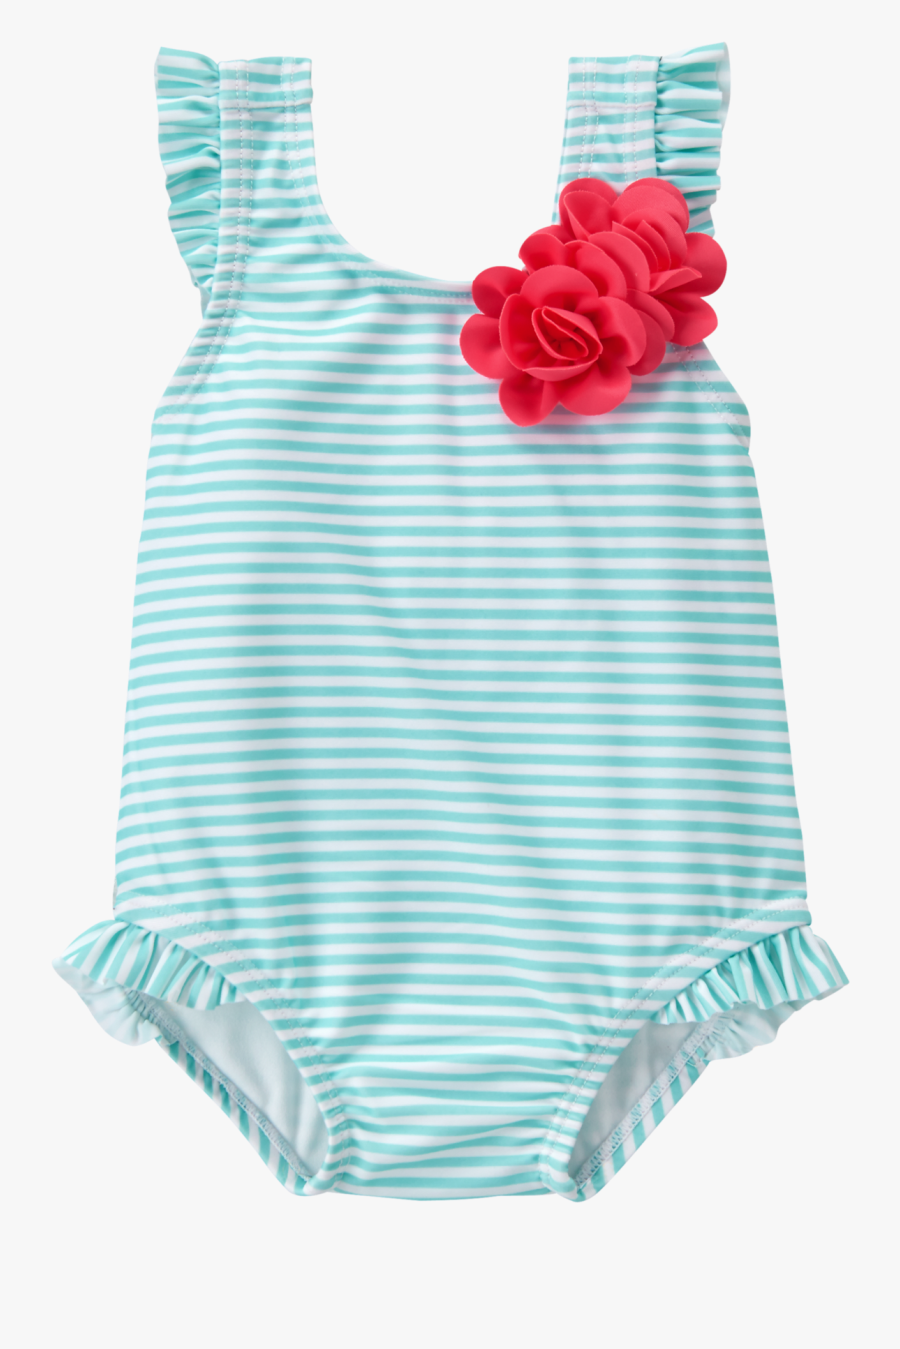 Clip Art Little Girls Swimsuit - Swimsuit Bottom, Transparent Clipart